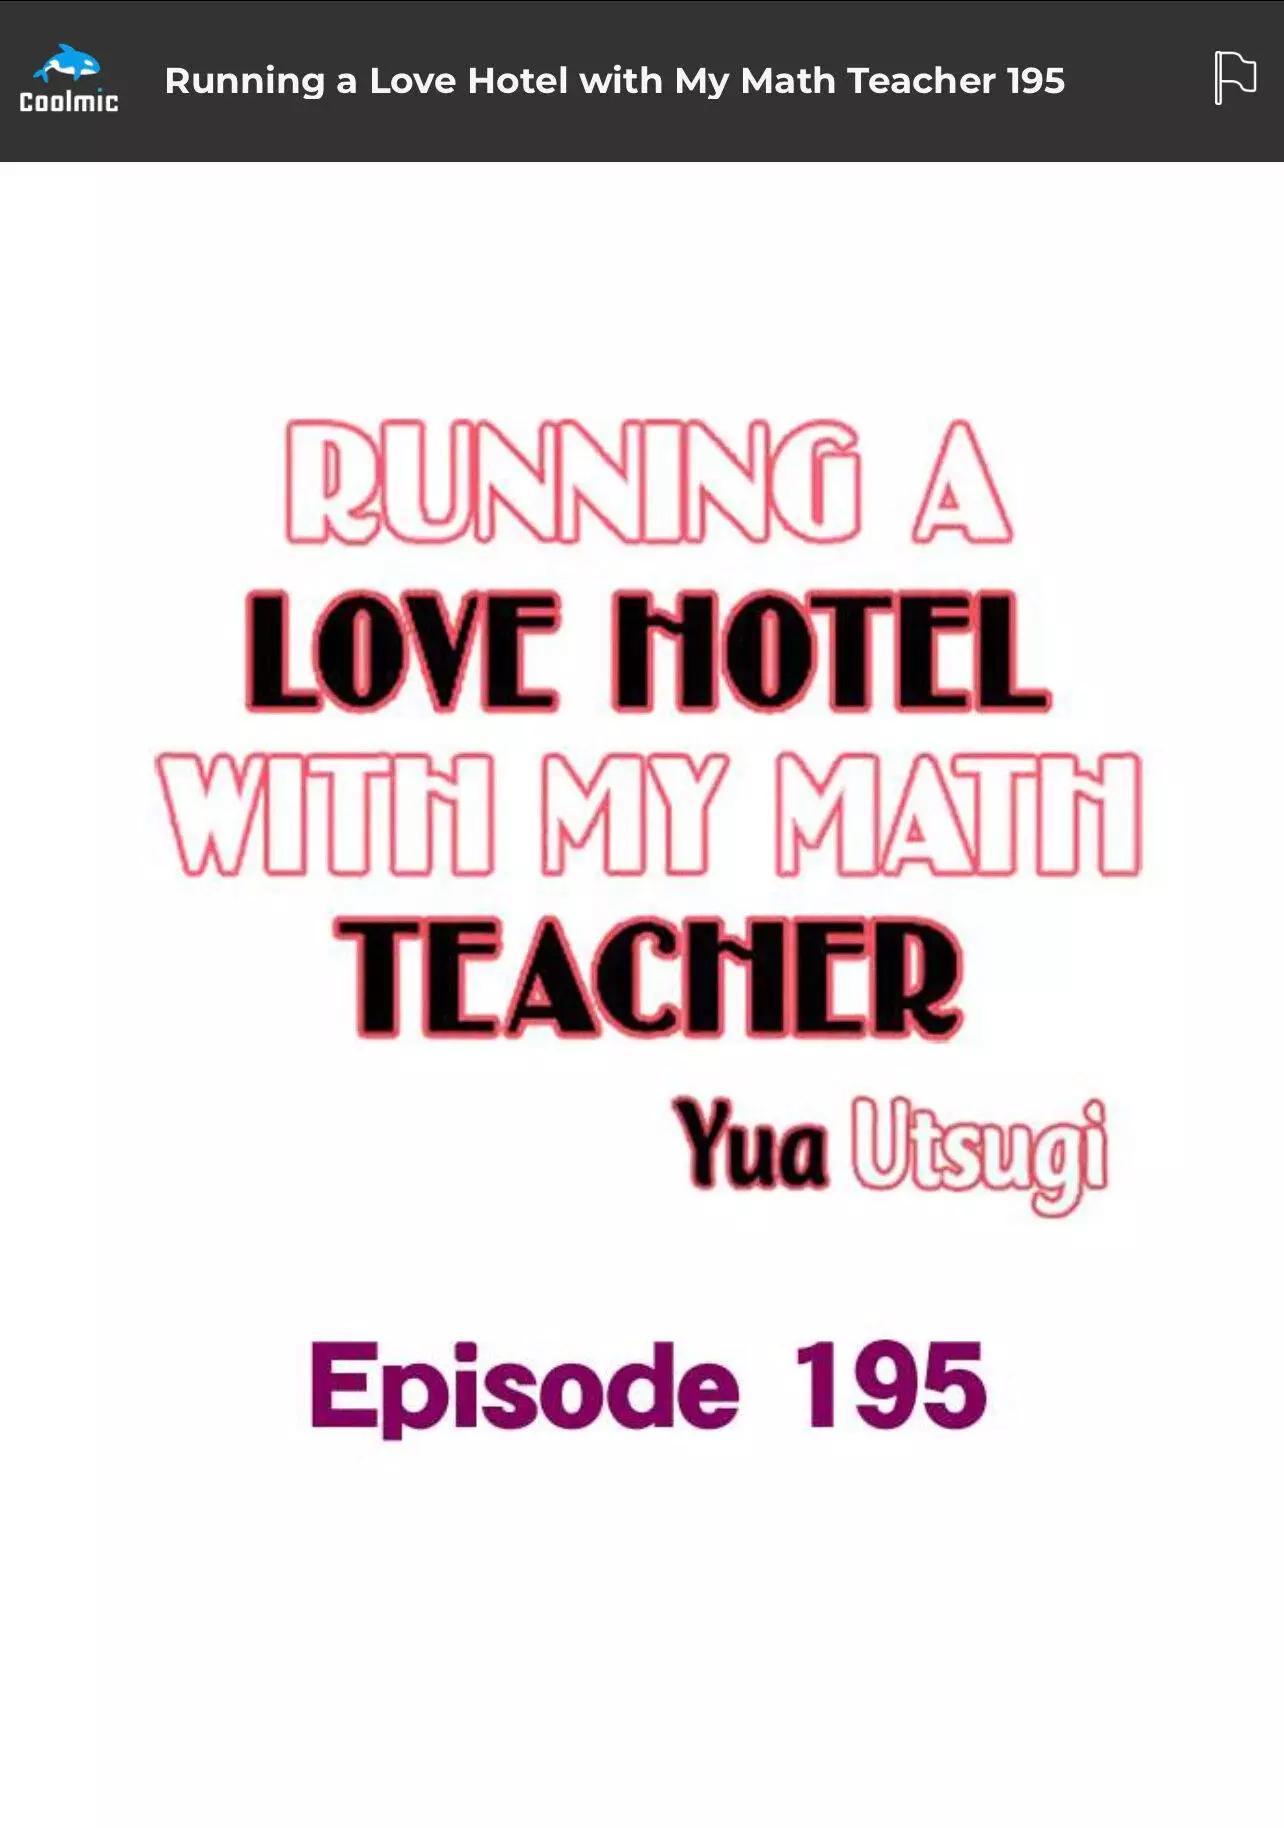 Running A Love Hotel With My Math Teacher - 195 page 2-a7037e03